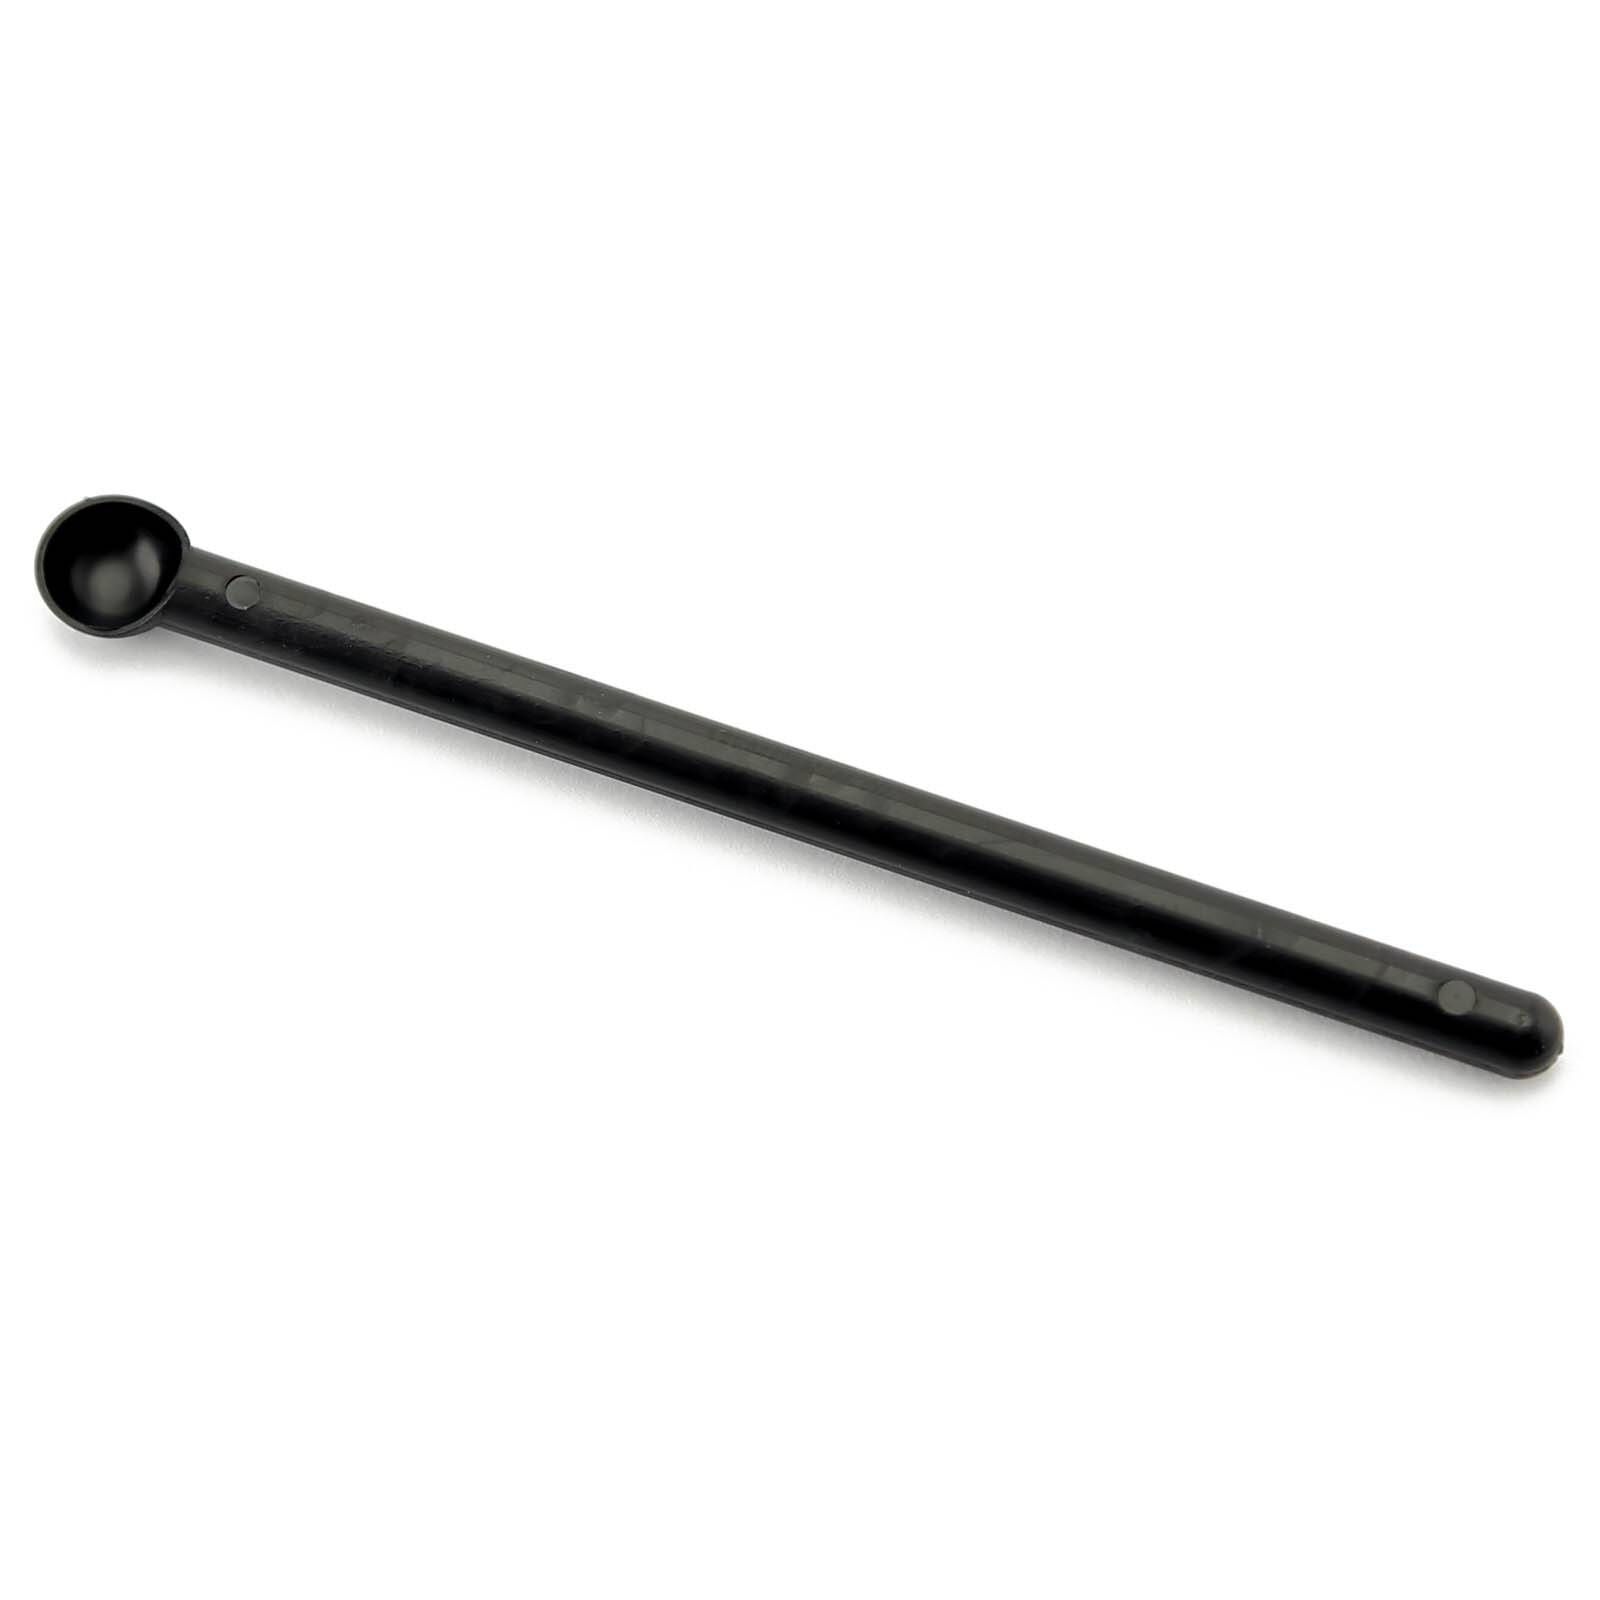 https://www.aquasabi.com/media/image/product/16304/lg/macherey-nagel-black-measuring-spoon-70-mm.jpg